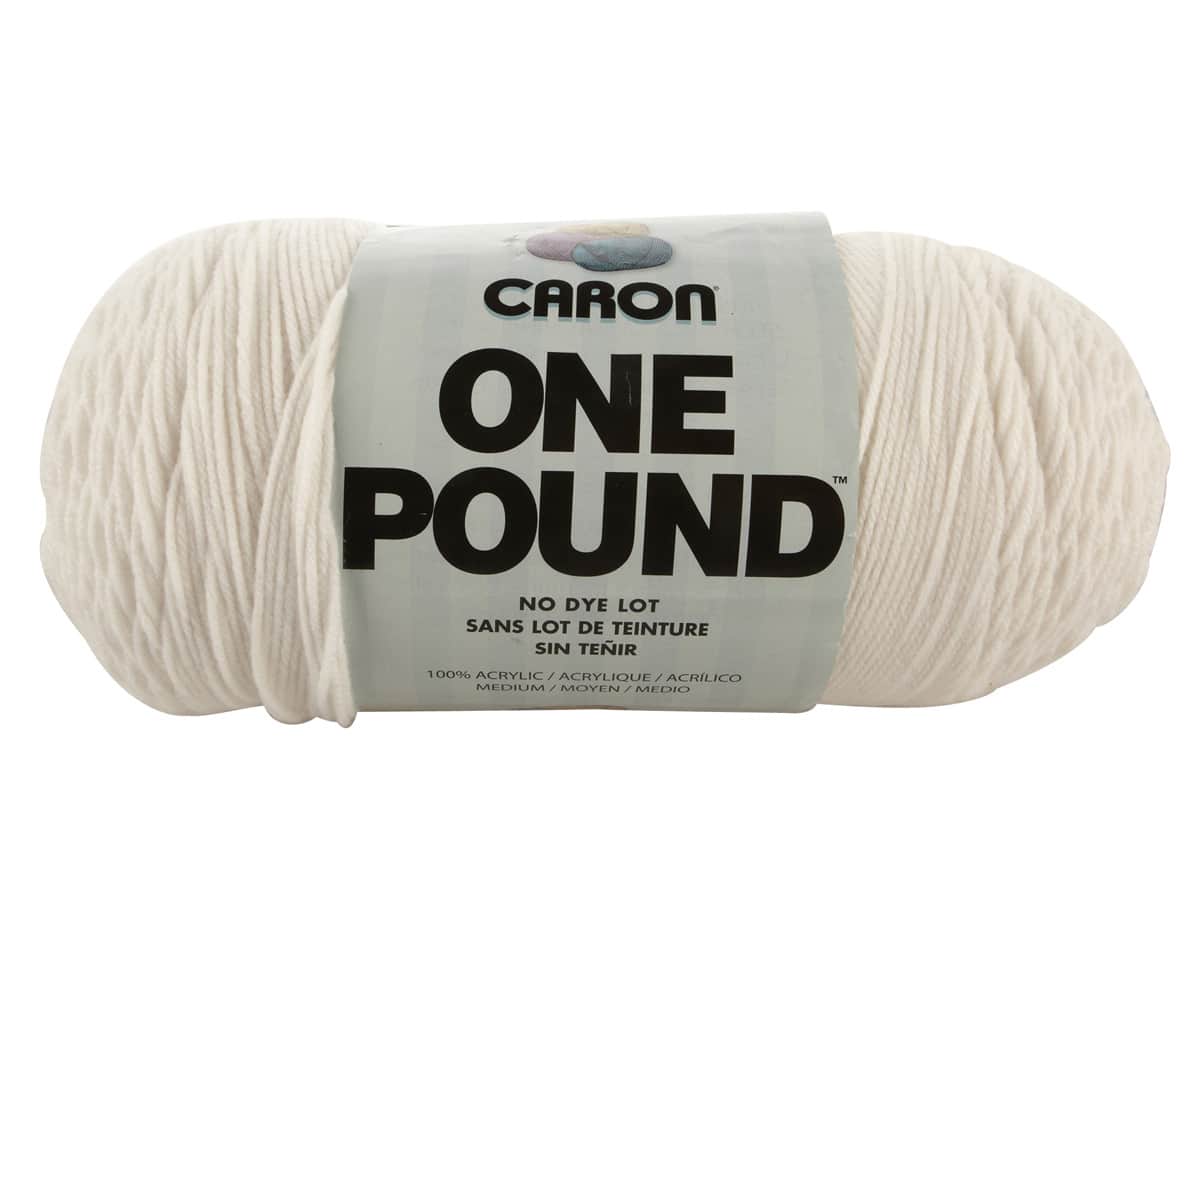 Medium Gauge 100% Acrylic 16 oz OffWhite- For Crochet 1 Piece 4 Knitting & Crafting Caron  One Pound Solids Yarn - 